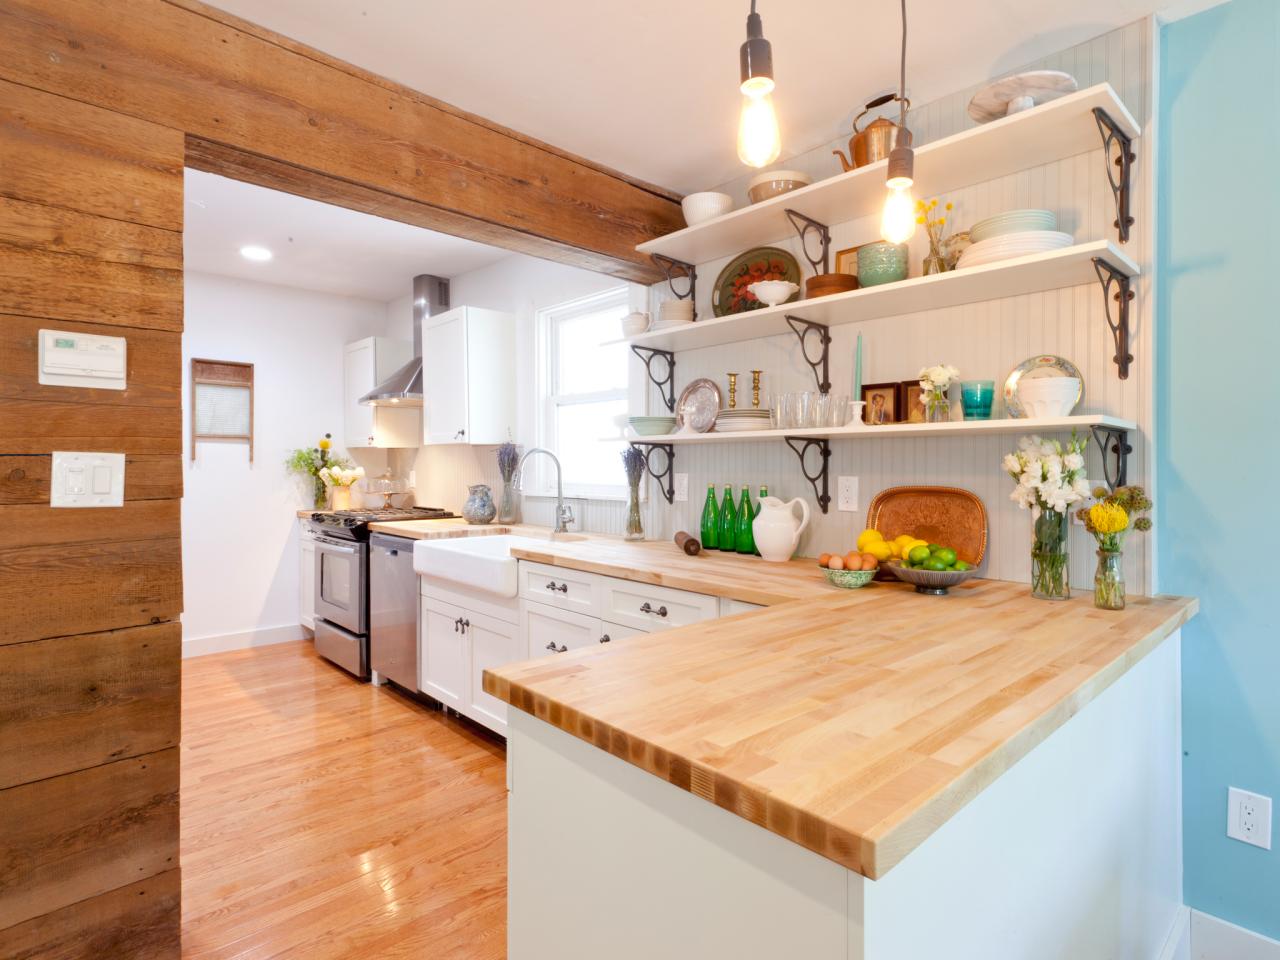 BP_HUCOH104H_white-cottage-kitchen-reclaimed-wood_h.jpg.rend.hgtvcom.1280.960.jpeg